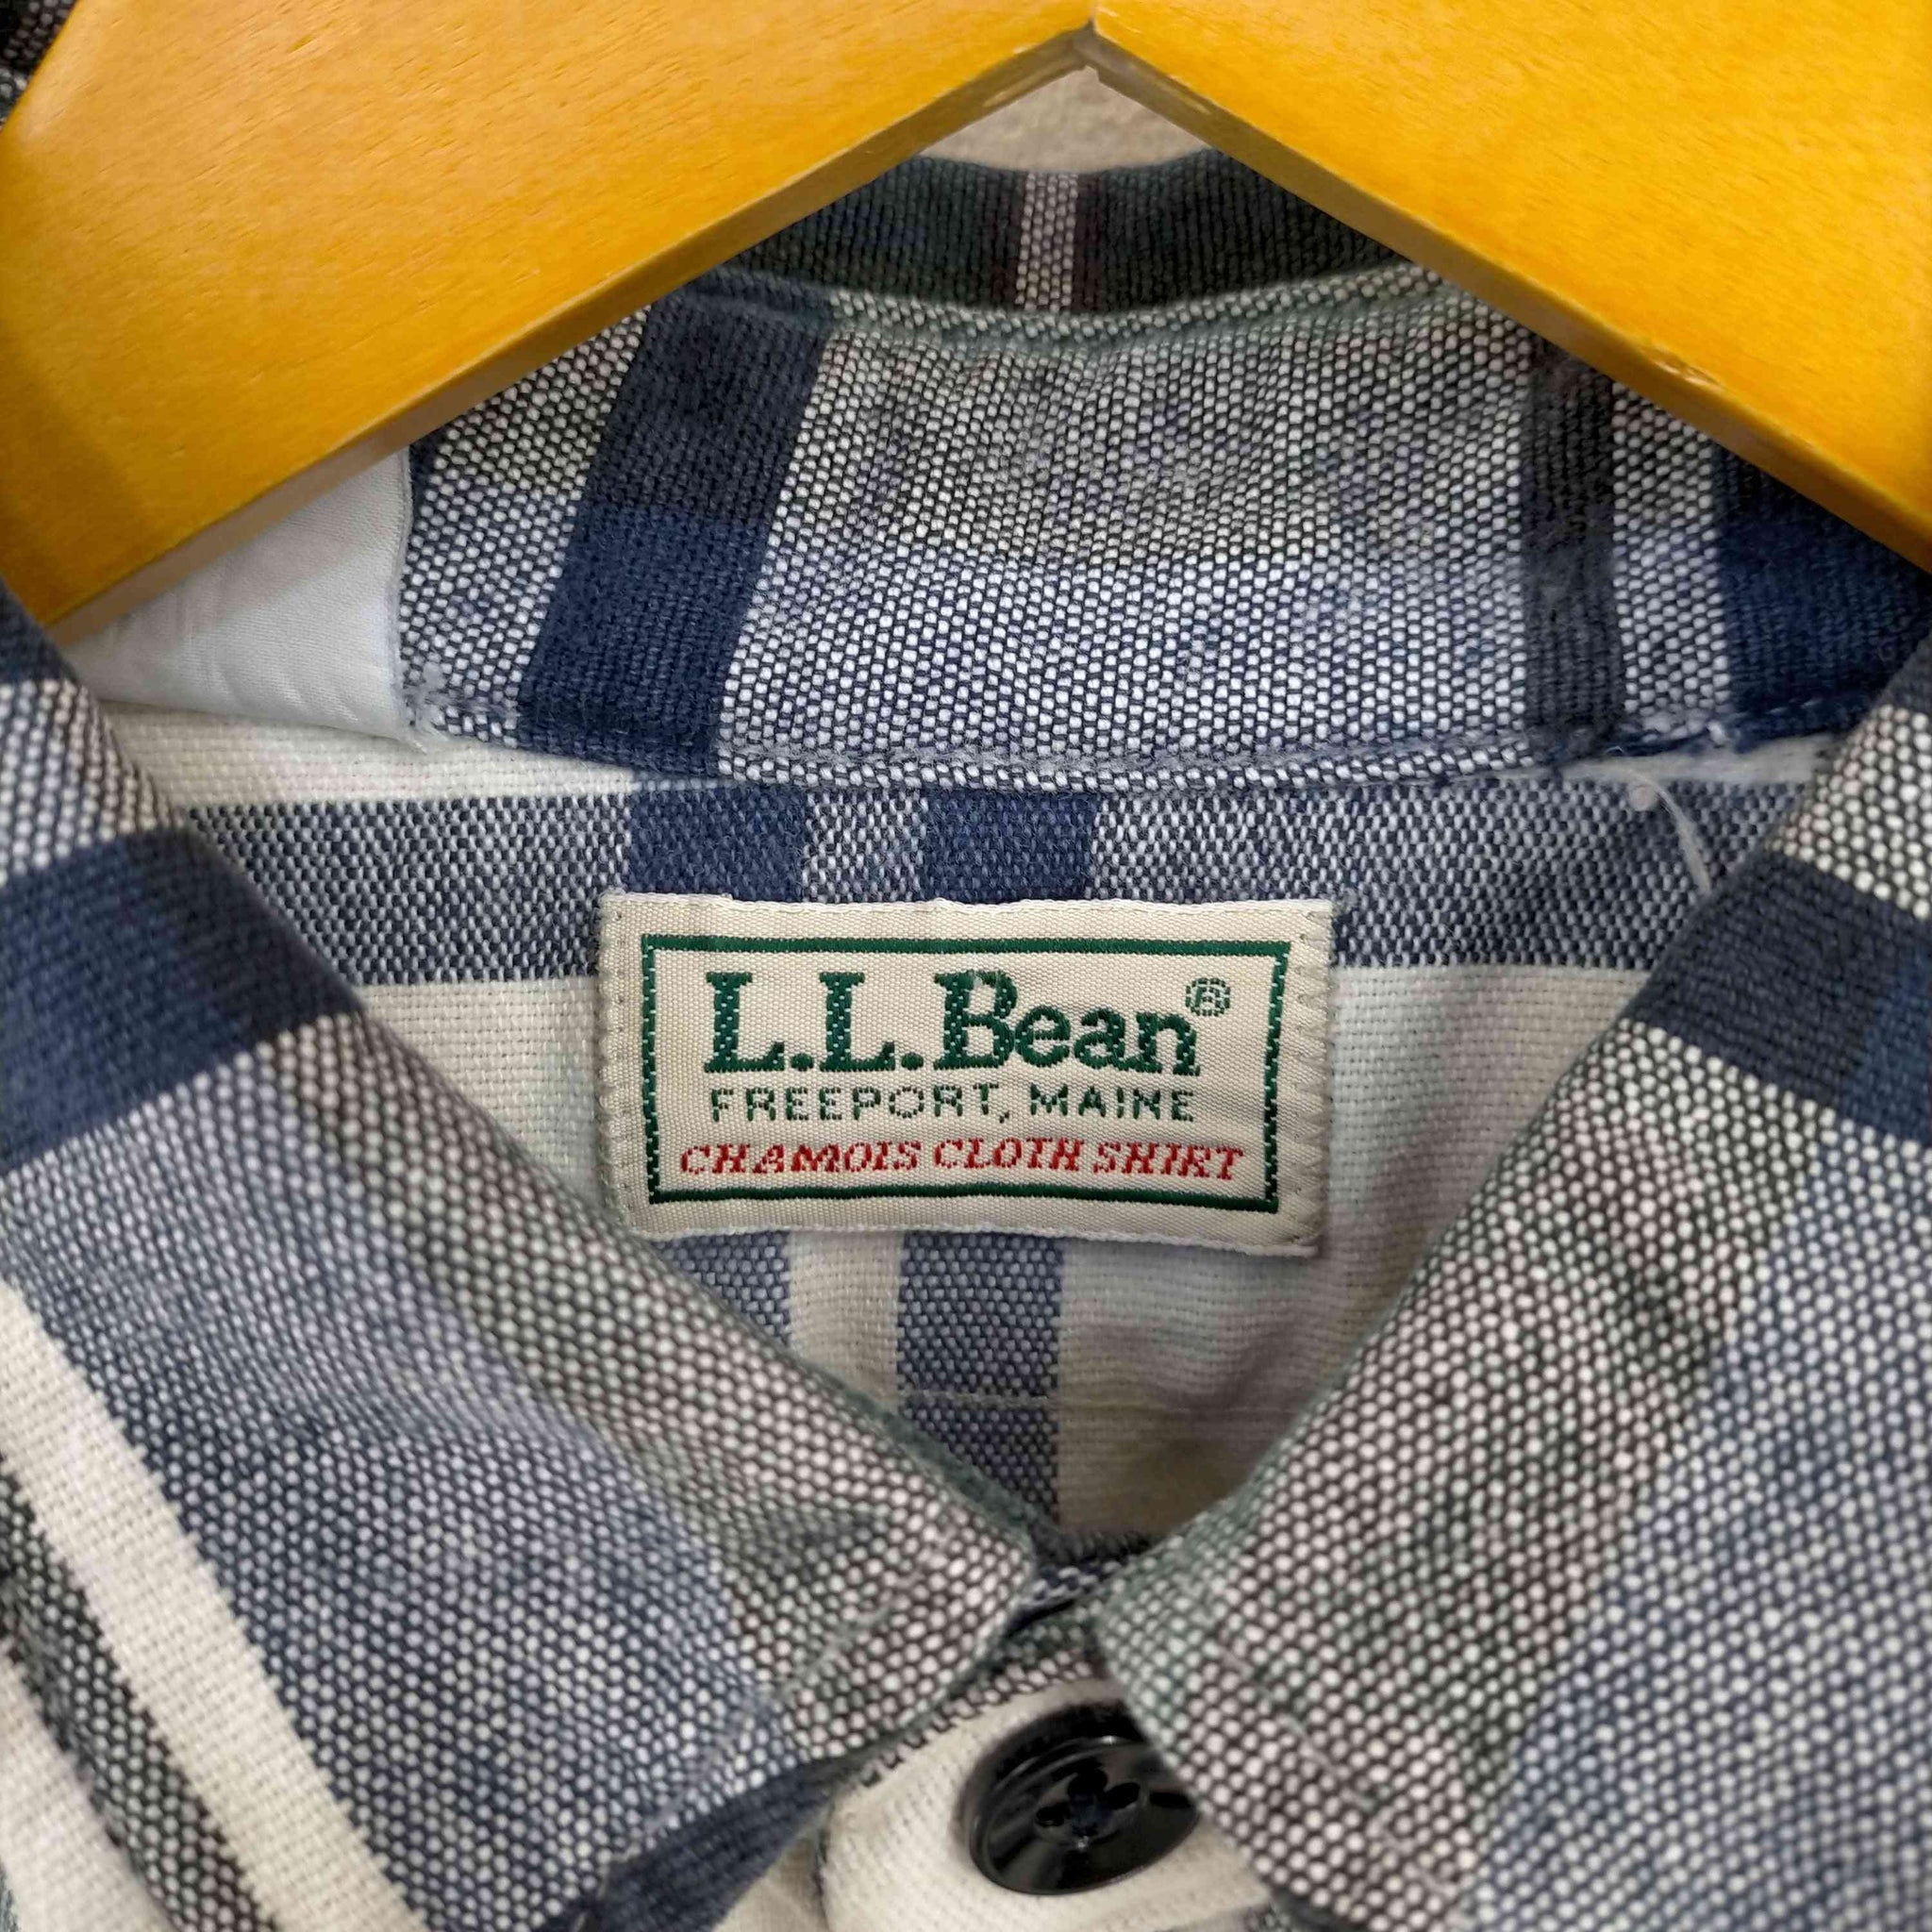 L.L.Bean(エルエルビーン)80s chamois cloth shirt